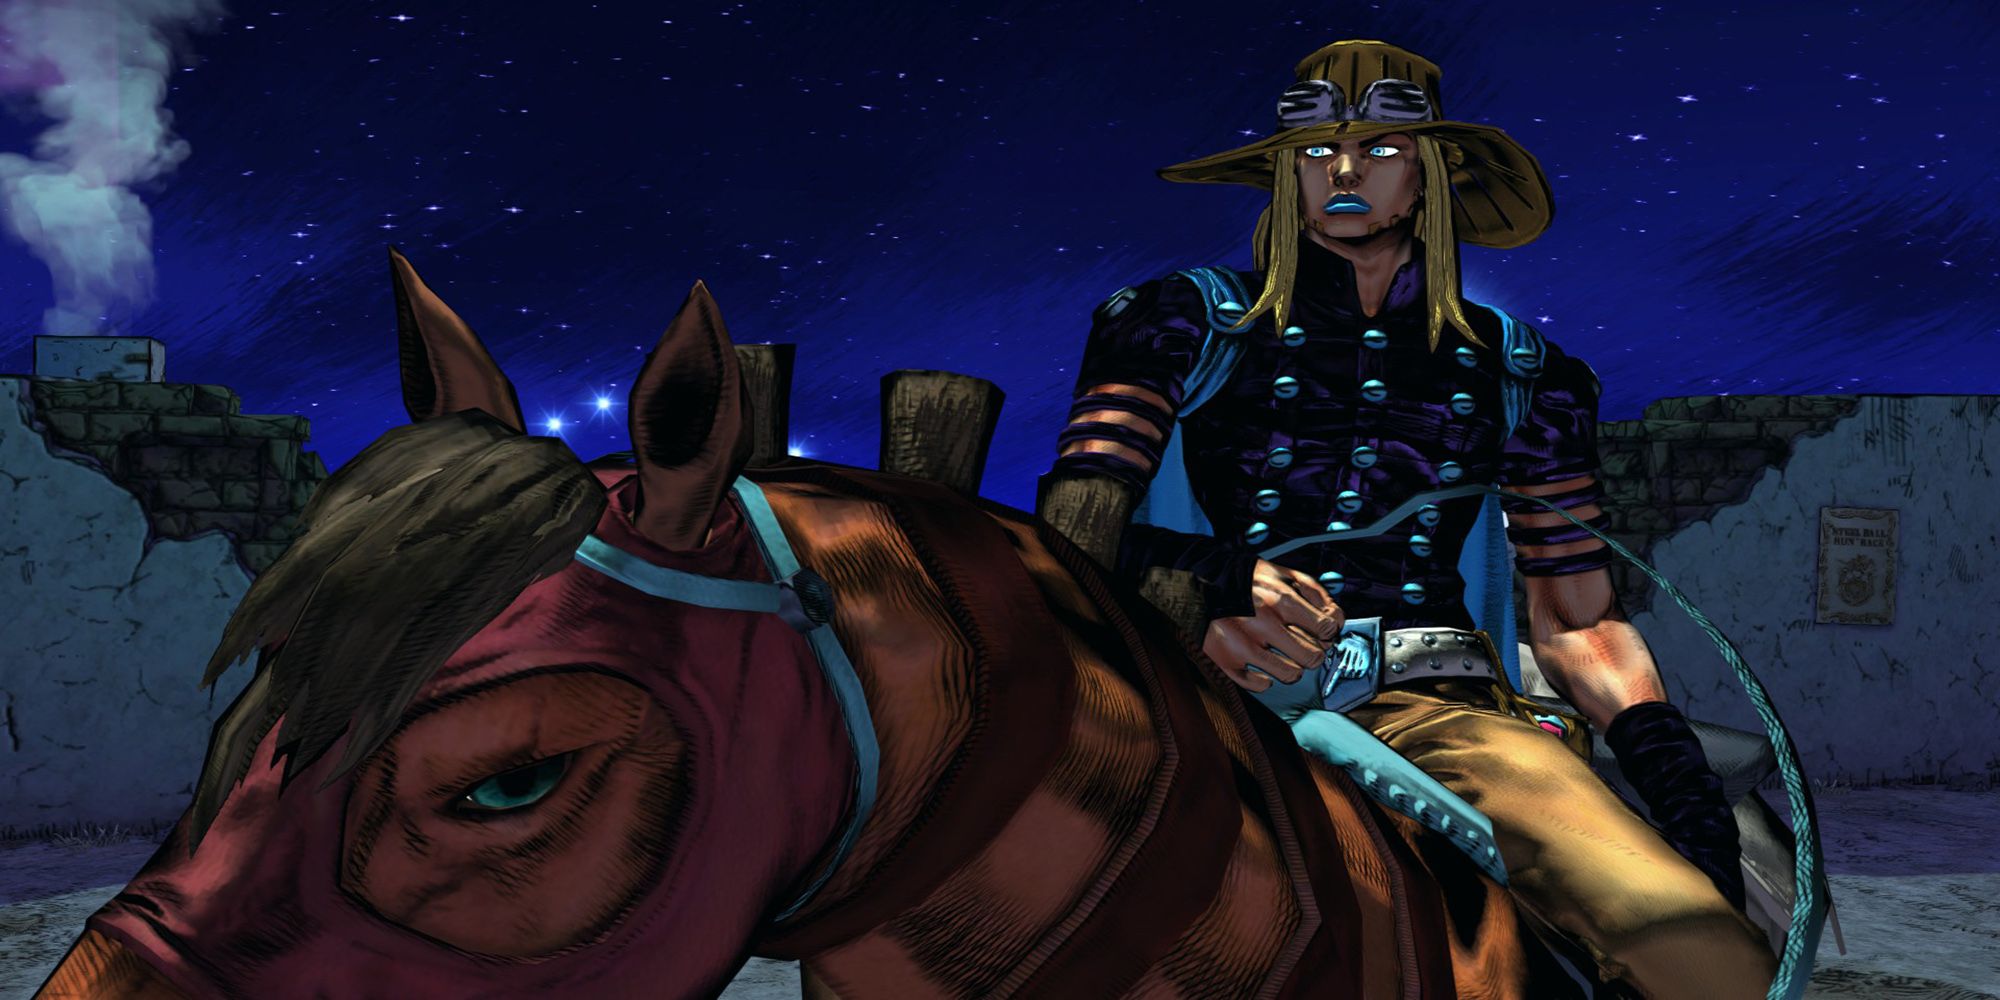 Gyro Zeppeli rides his horse in Rocky Mountain Village in JoJo's Bizarre Adventure ASBR.